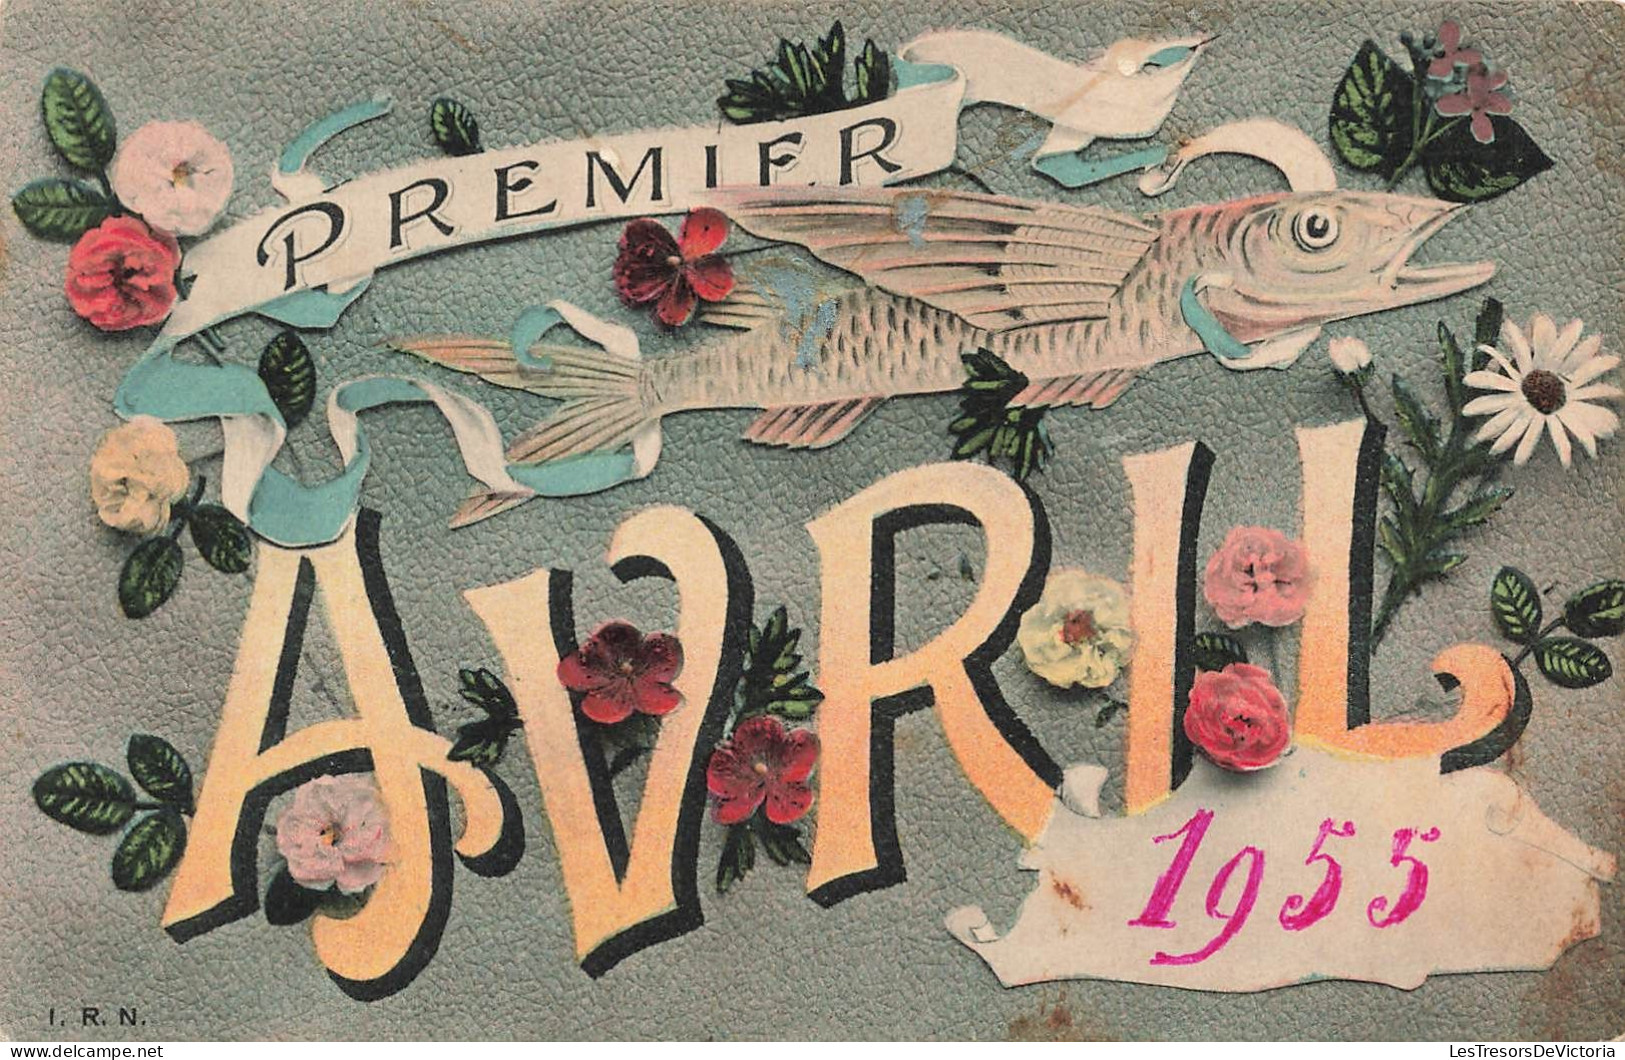 FETES - VOEUX - 1er Avril - Poisson D'avril - 1955 - Fleurs - Poisson - Carte Postale Ancienne - Erster April